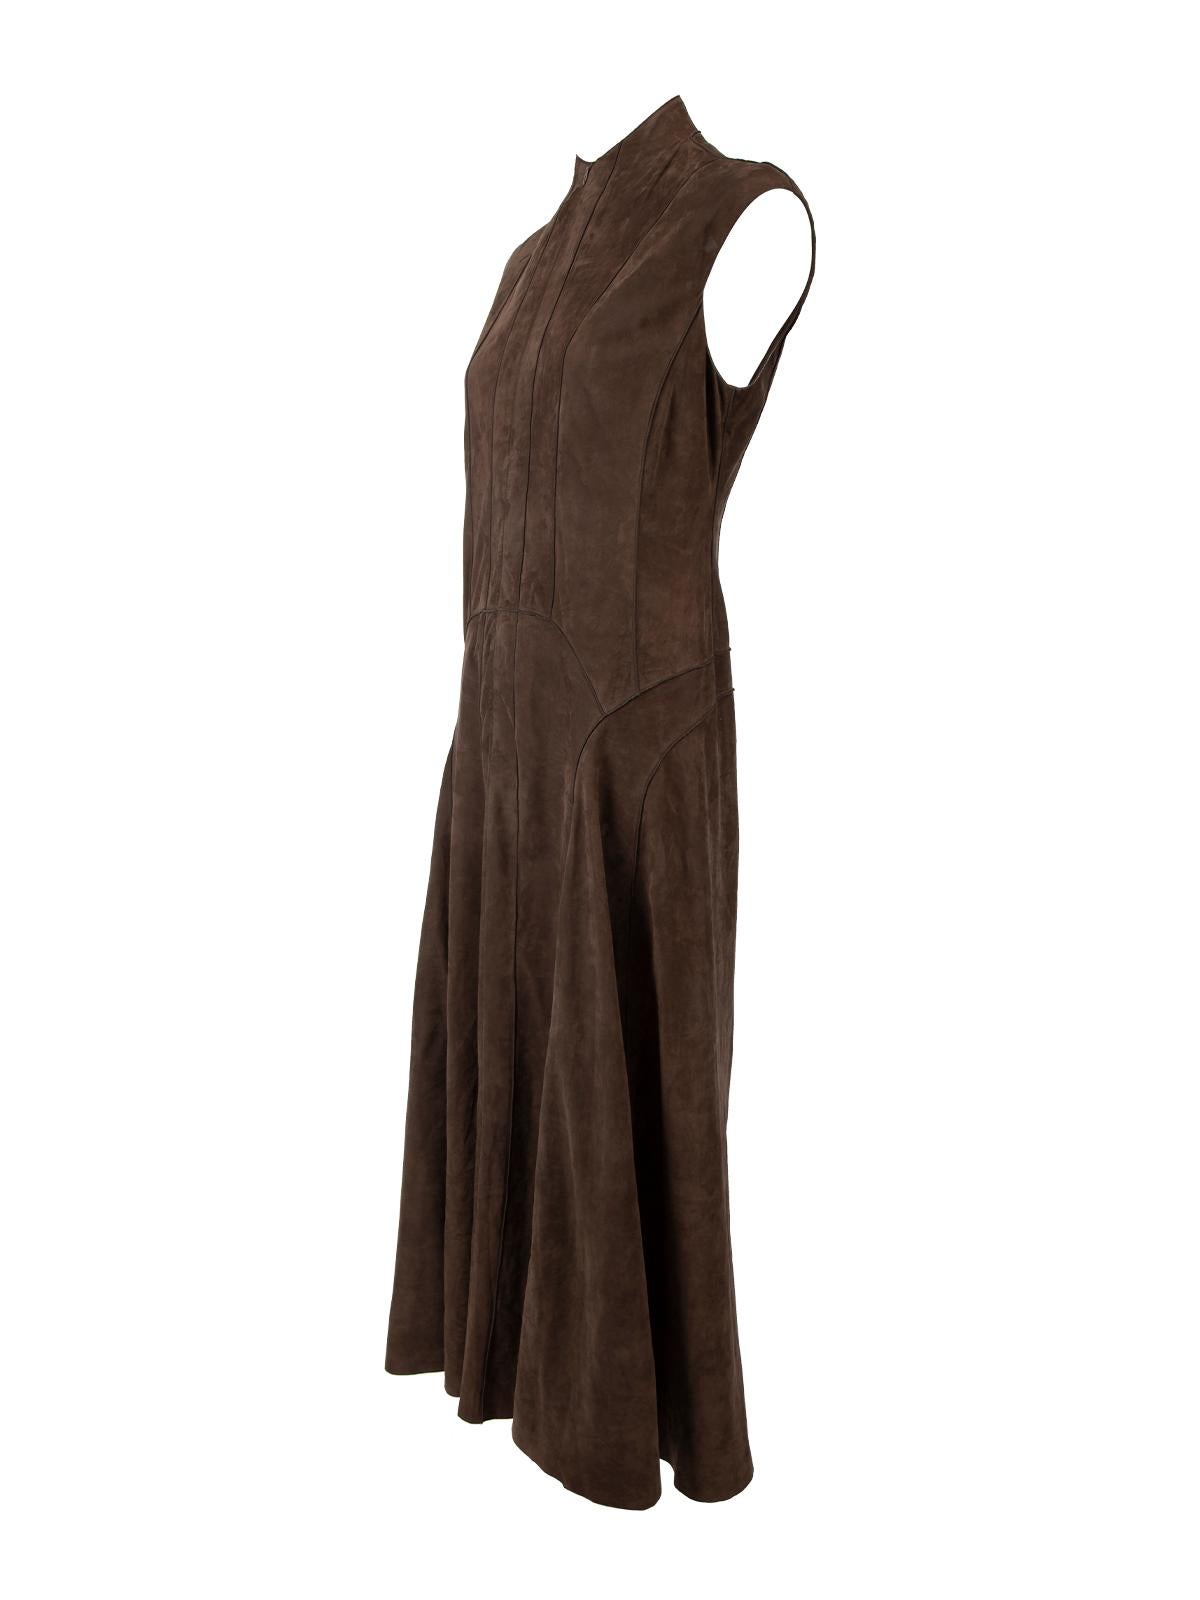 Pre-Loved Calvin Klein Women's Brown Suede Sleeveless Drop Waist Flared Dress 1